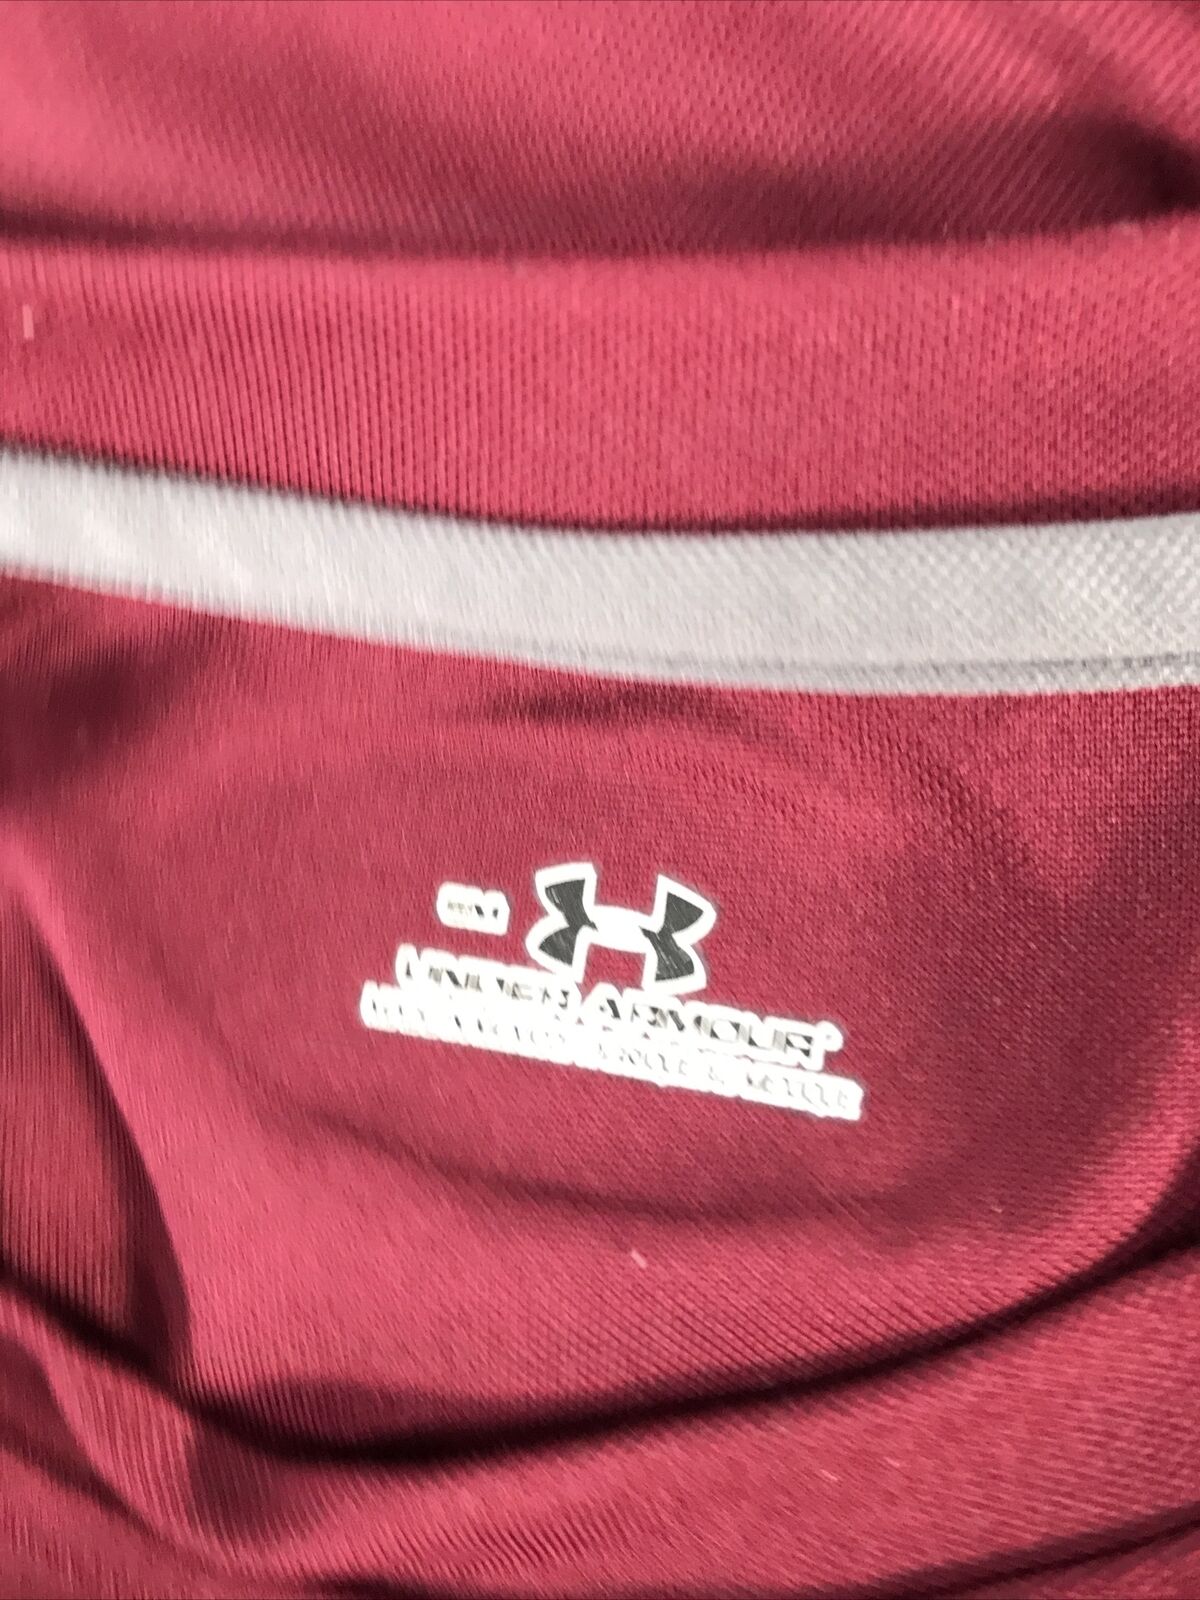 Under Armour Camiseta deportiva de manga larga roja para hombre - S